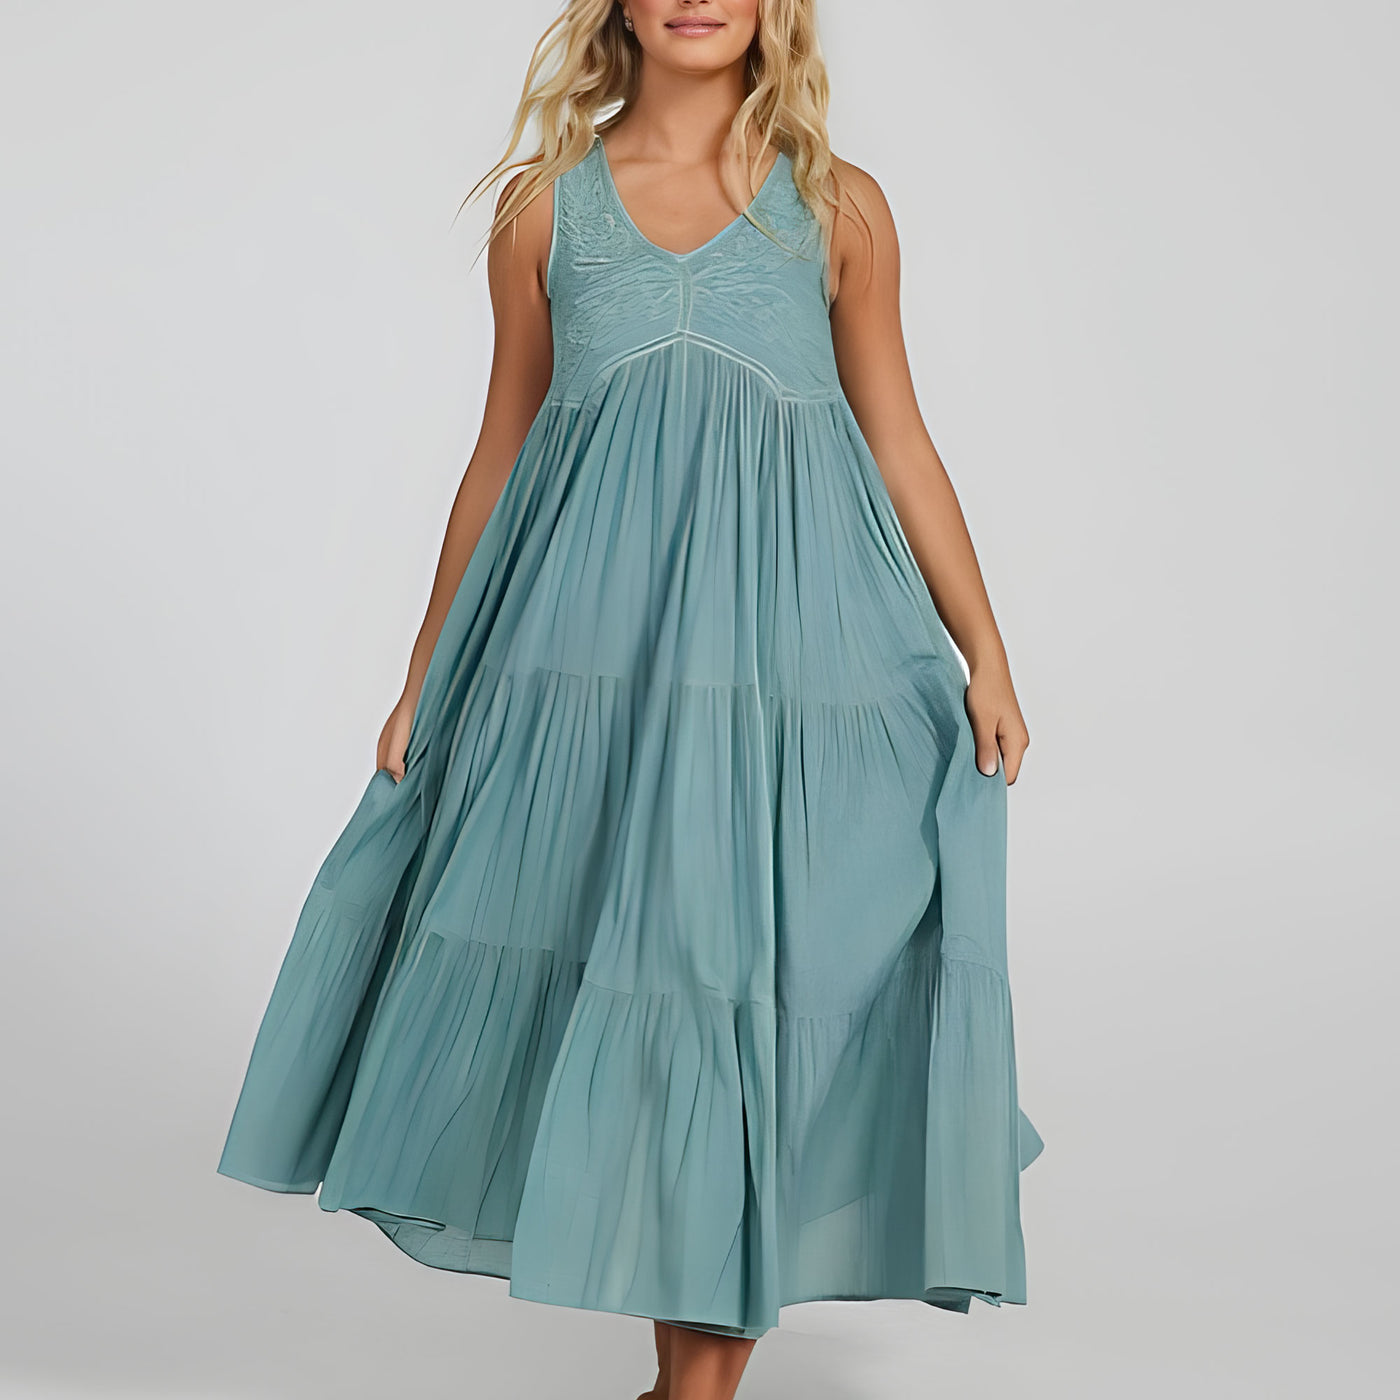 Aqua Teal Embroidered Dress-Ocean Blue